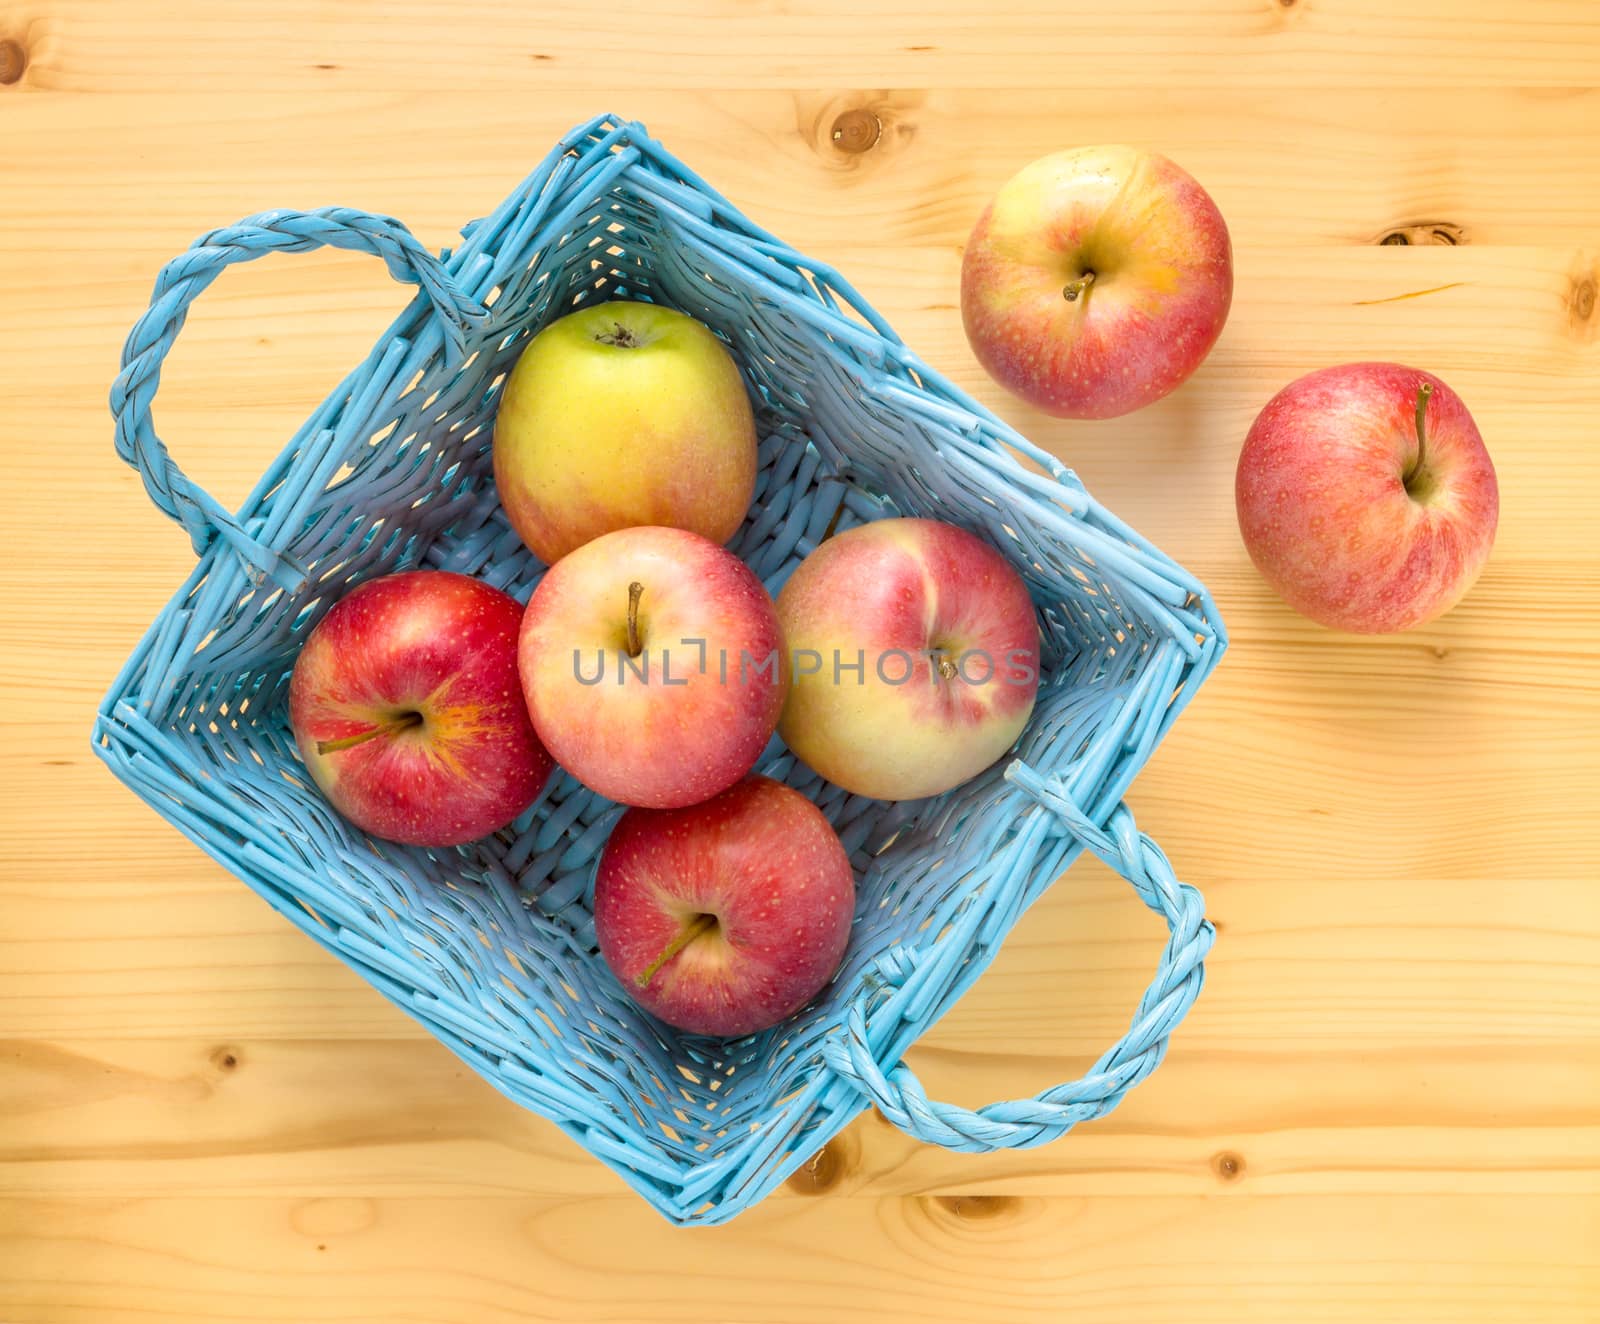 Red apples in blue wooden basket by germanopoli